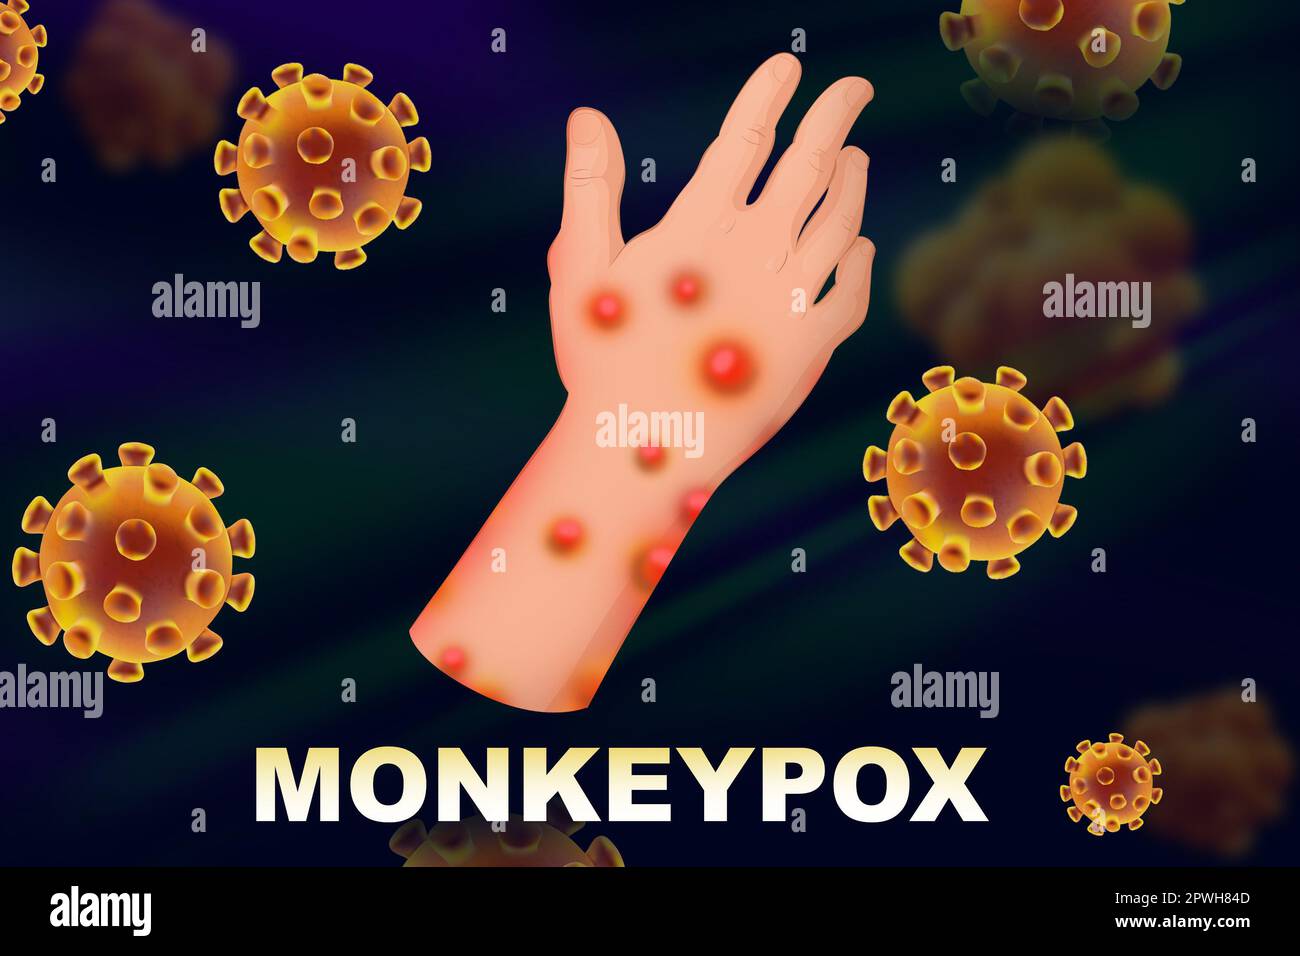 Person diseased by monkeypox virus, illustration. Dangerous disease Stock Photo